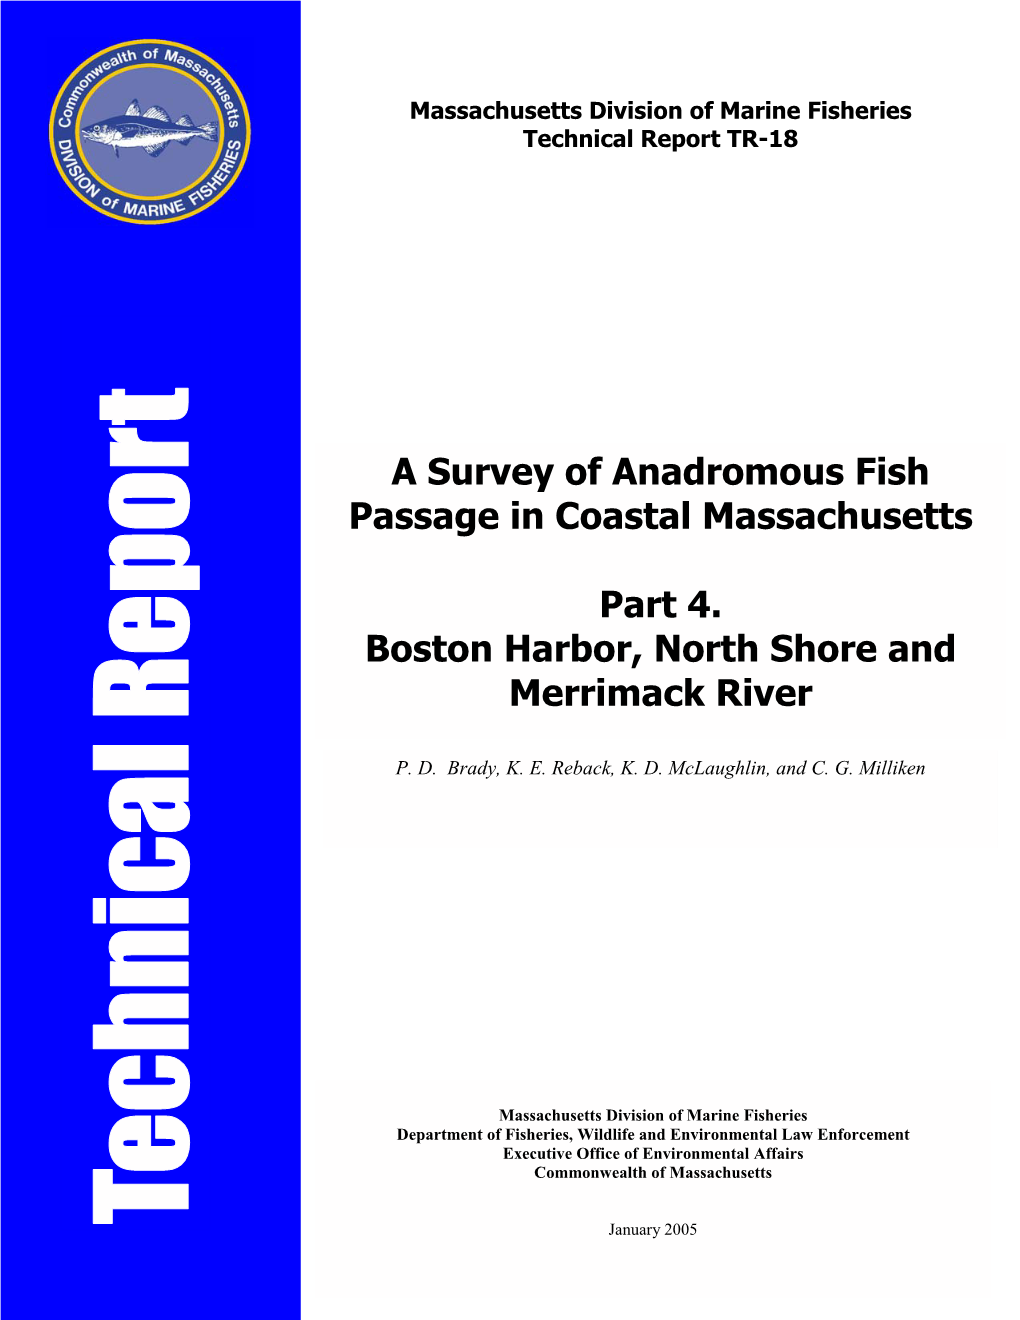 A Survey of Anadromous Fish Passage in Coastal Massachusetts